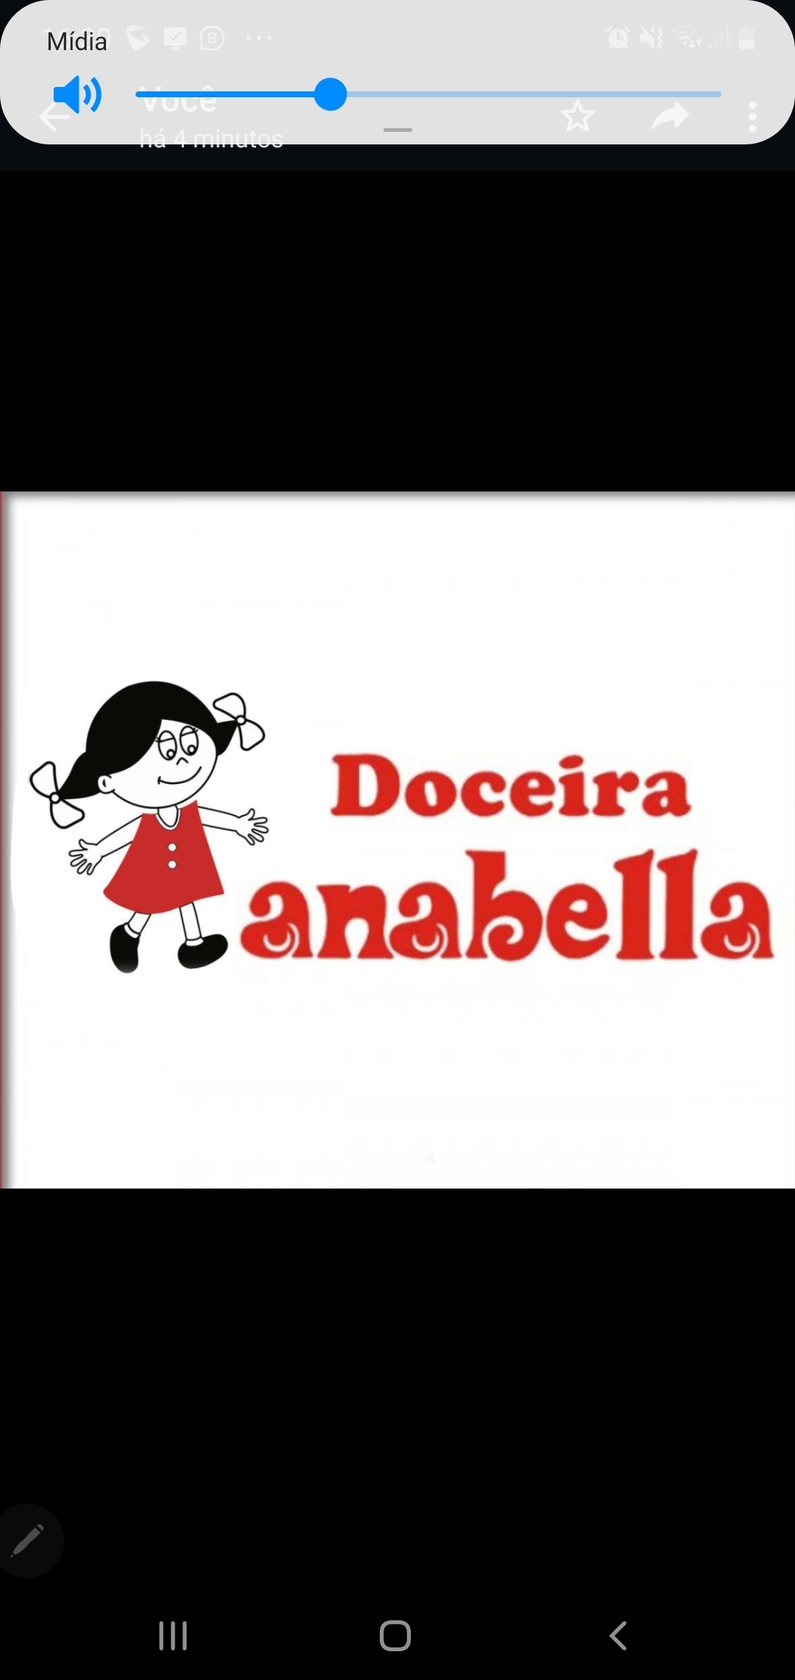 DOCEIRA ANA BELLA - PEDIDOS WHATSAPP: (11) 97205-9406